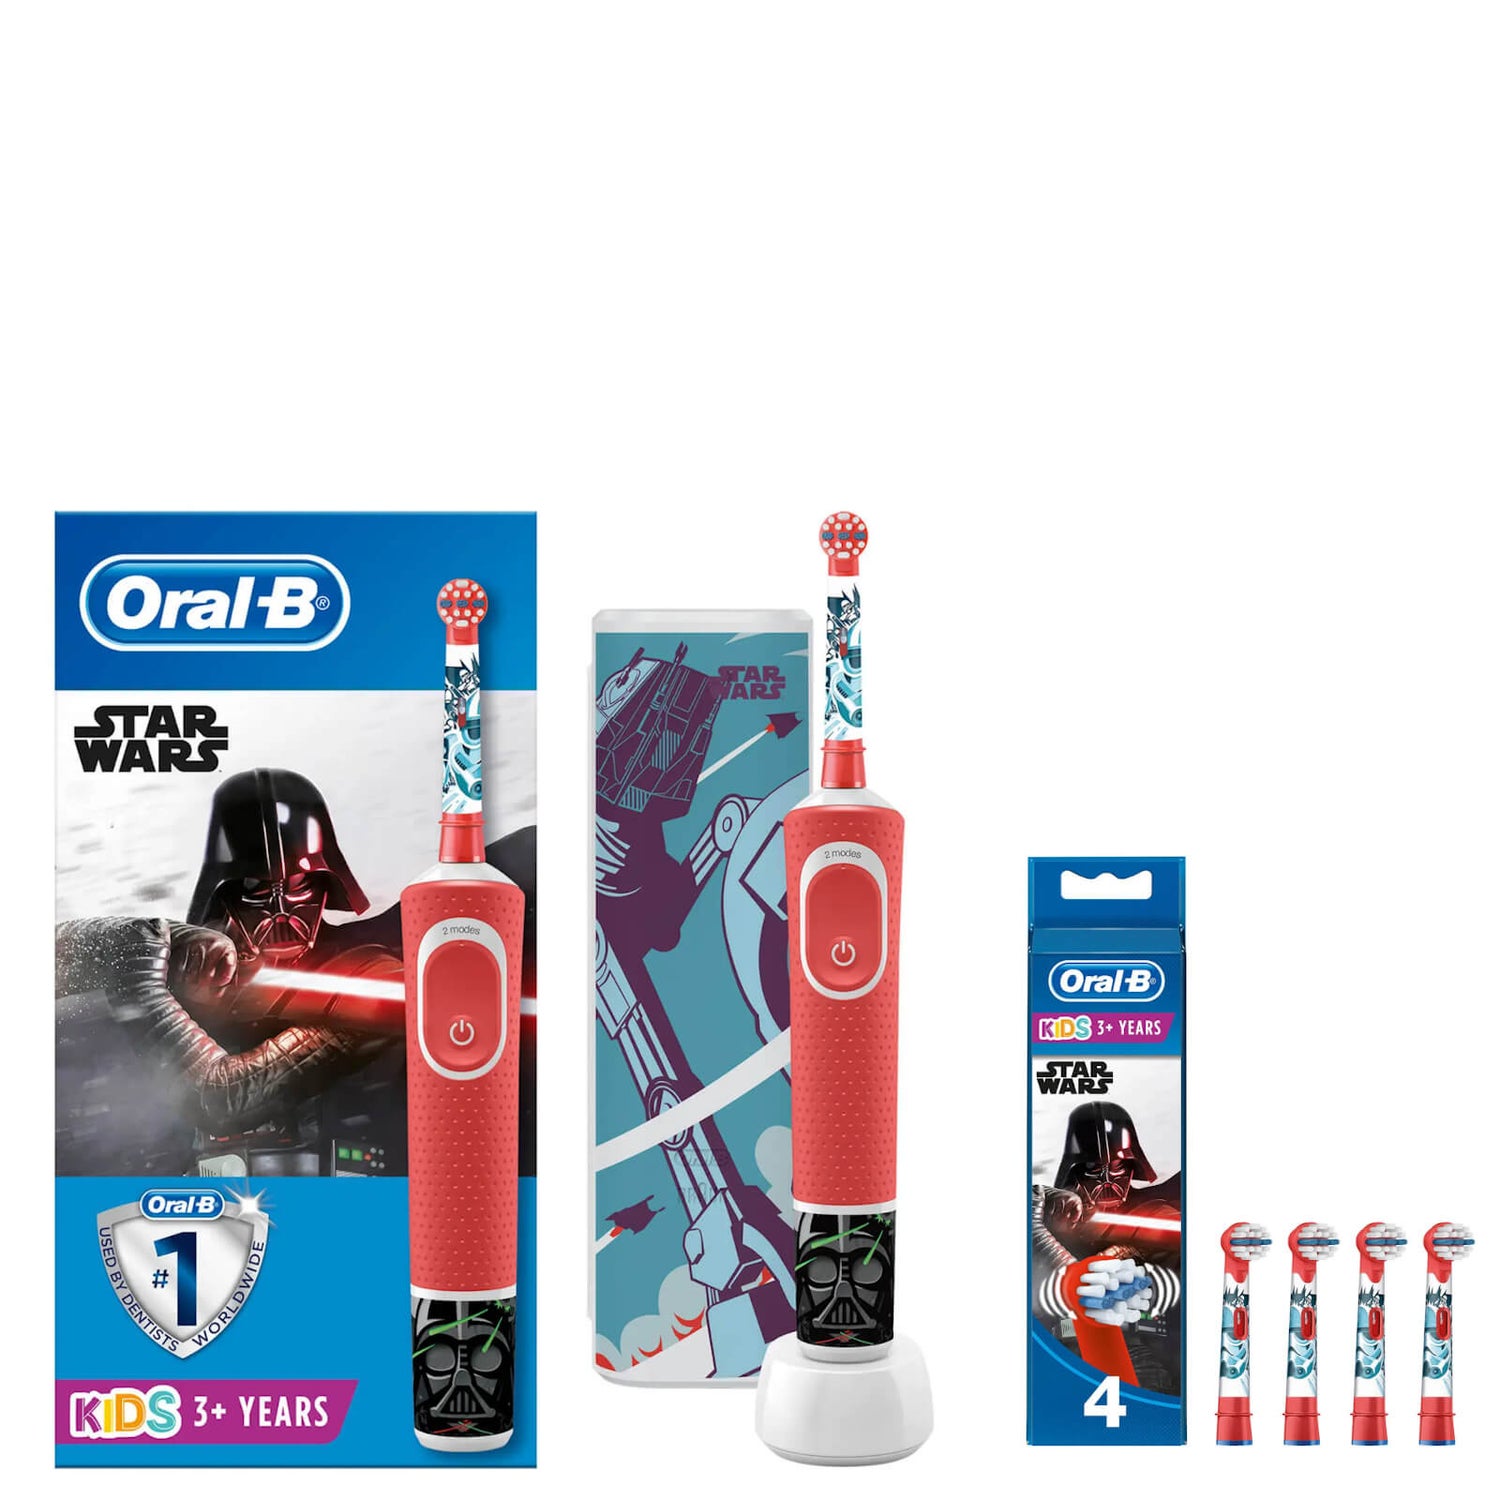 Oral-B Kids' Elektrische Tandenborstel Star Wars Met Exclusieve Reisetui